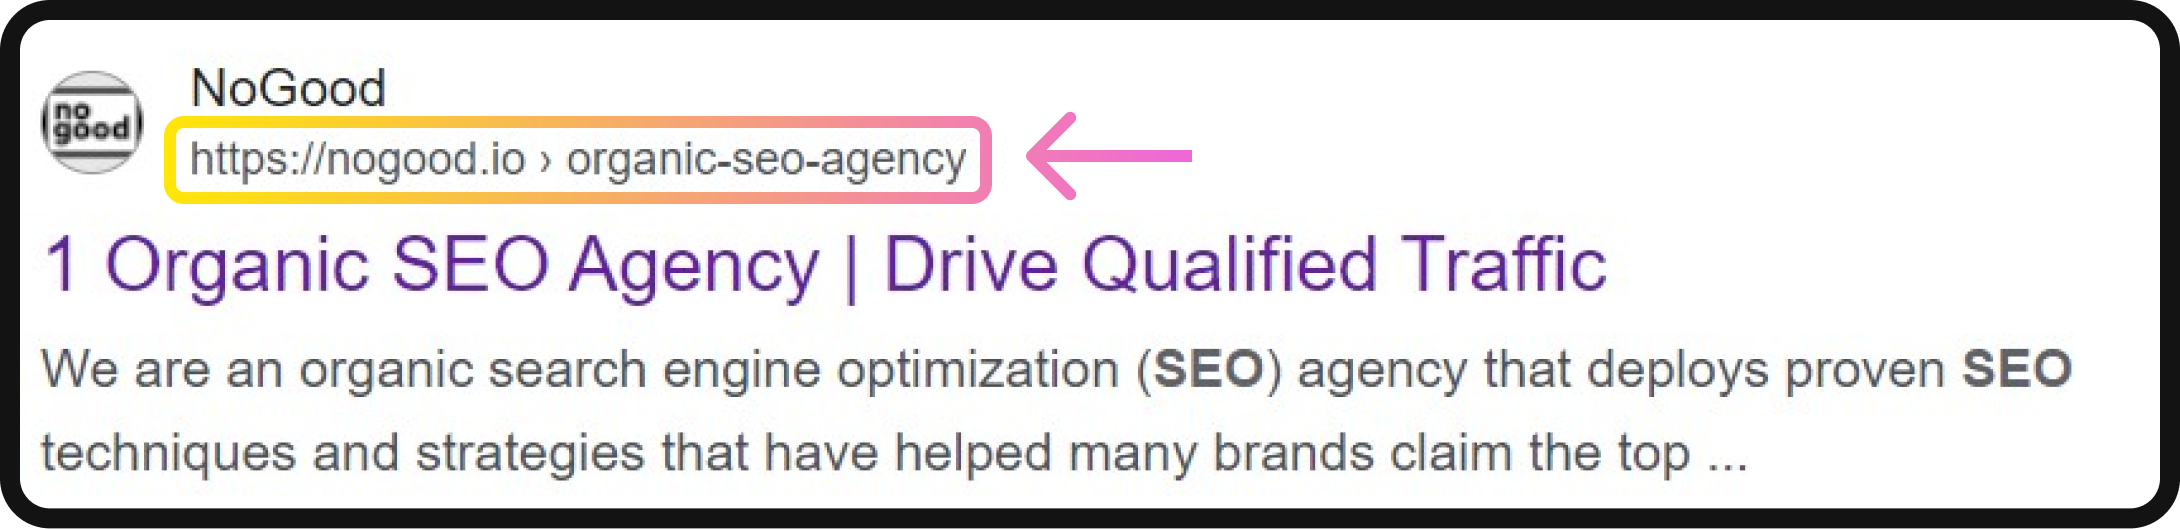 Organic SEO Agency URL